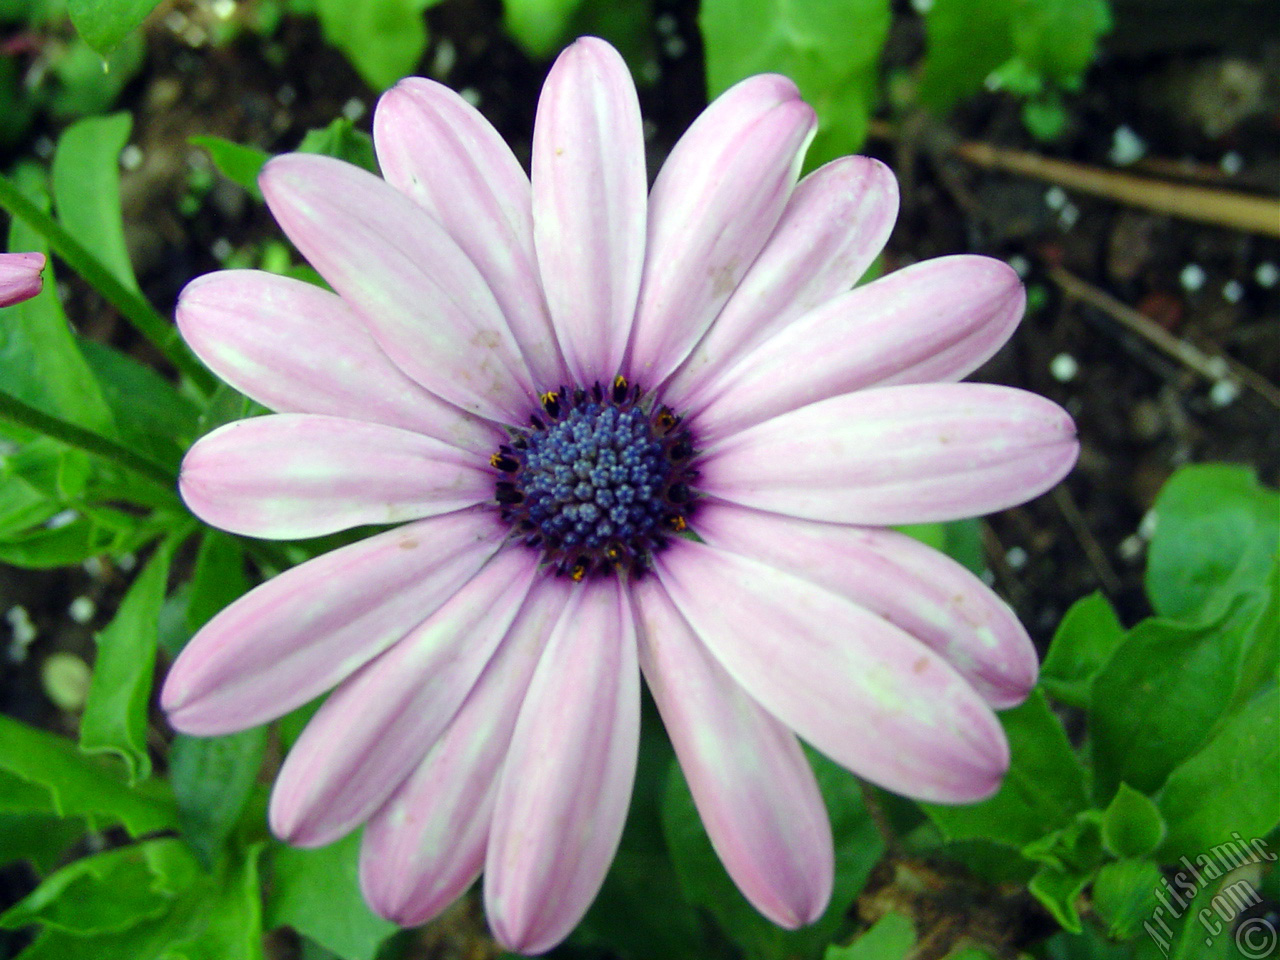 Pink color Trailing African Daisy -Freeway Daisy, Blue Eyed Daisy- flower.
